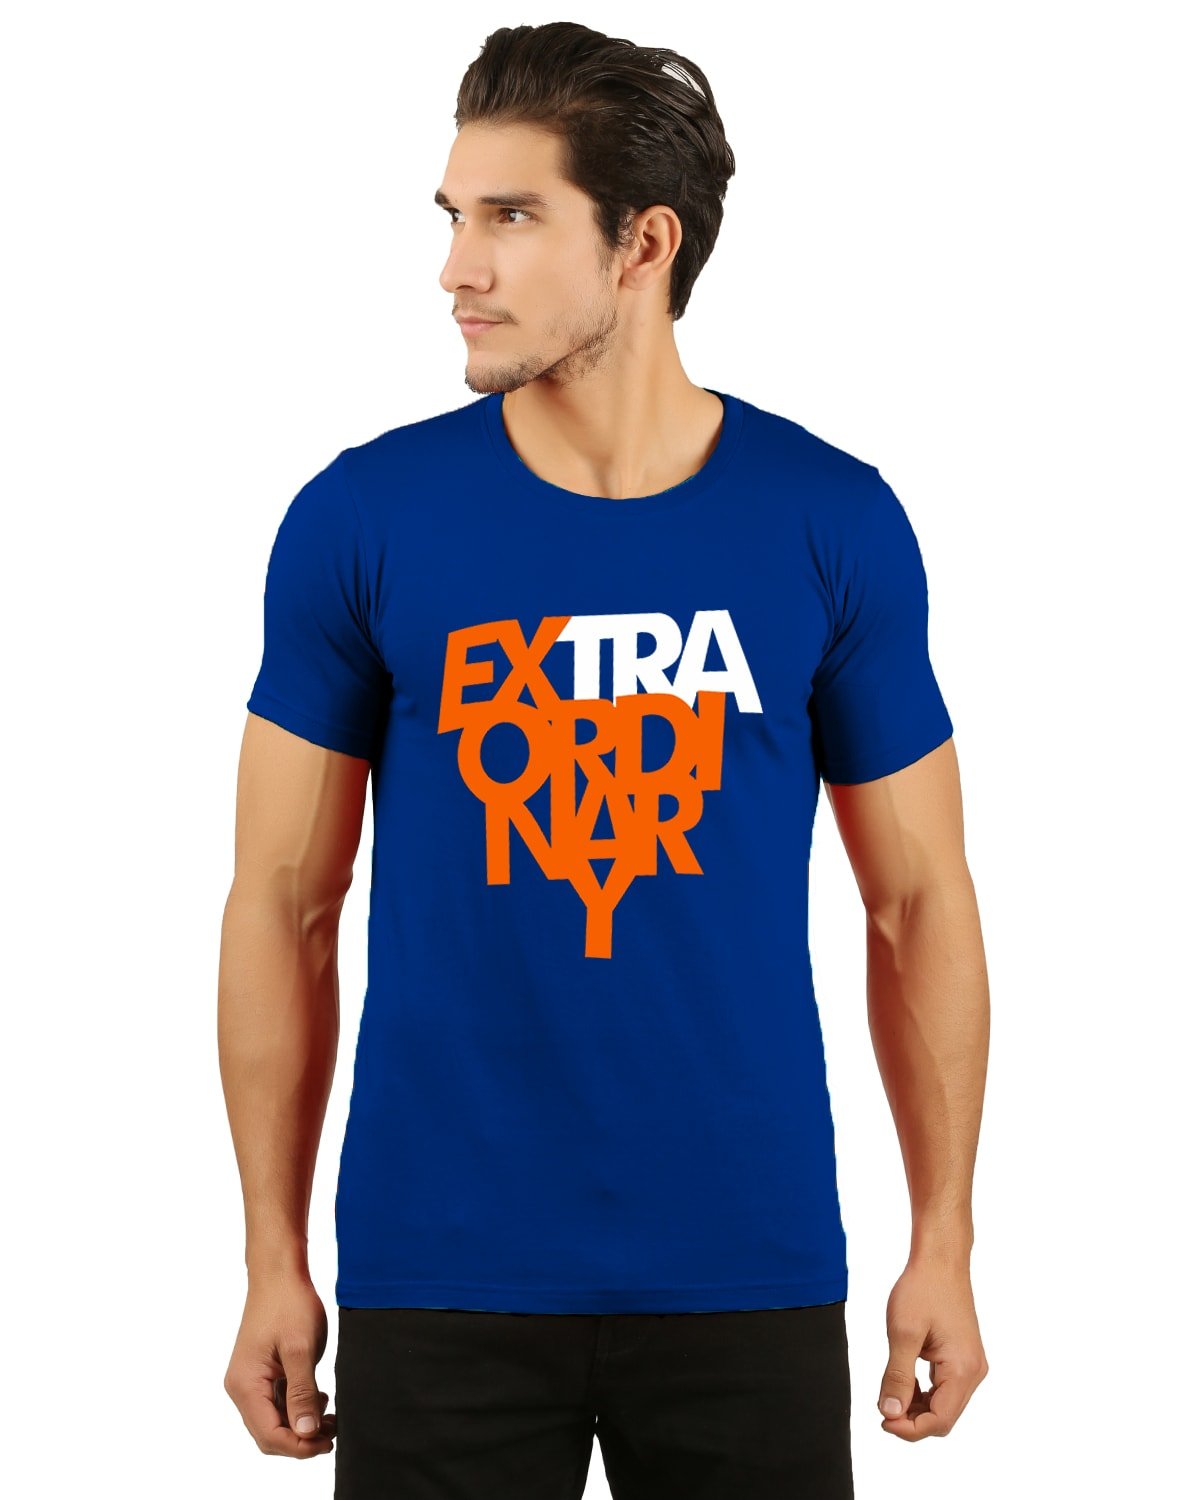 extra oridinary men graphics tees t-shirt royal blue